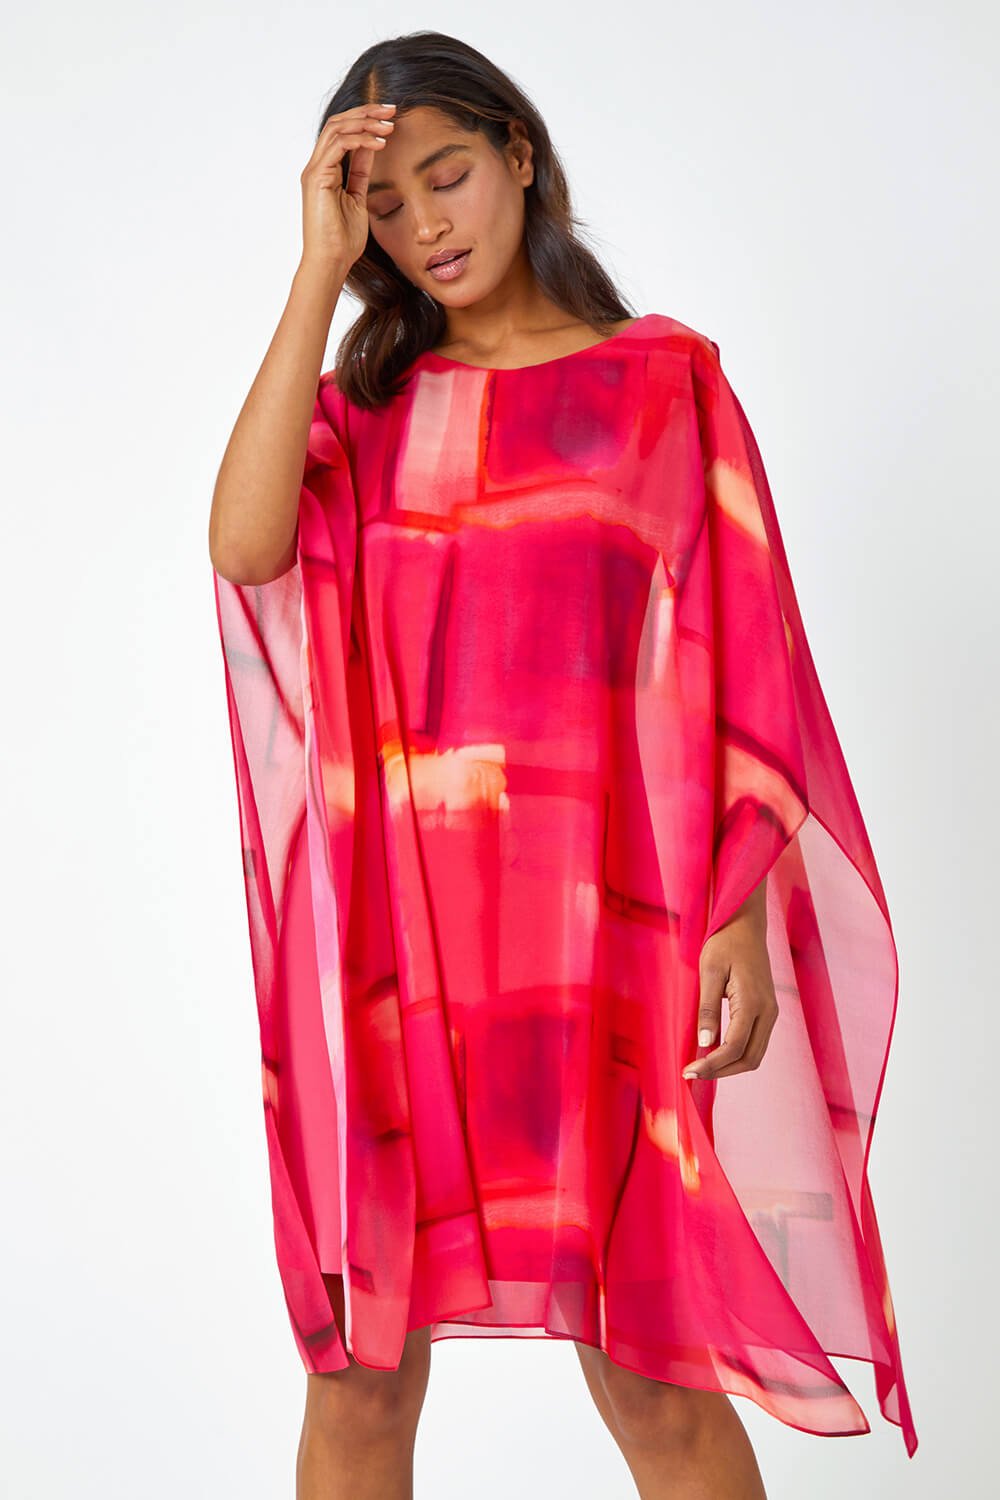 PINK Abstract Print Chiffon Overlay Dress, Image 2 of 5